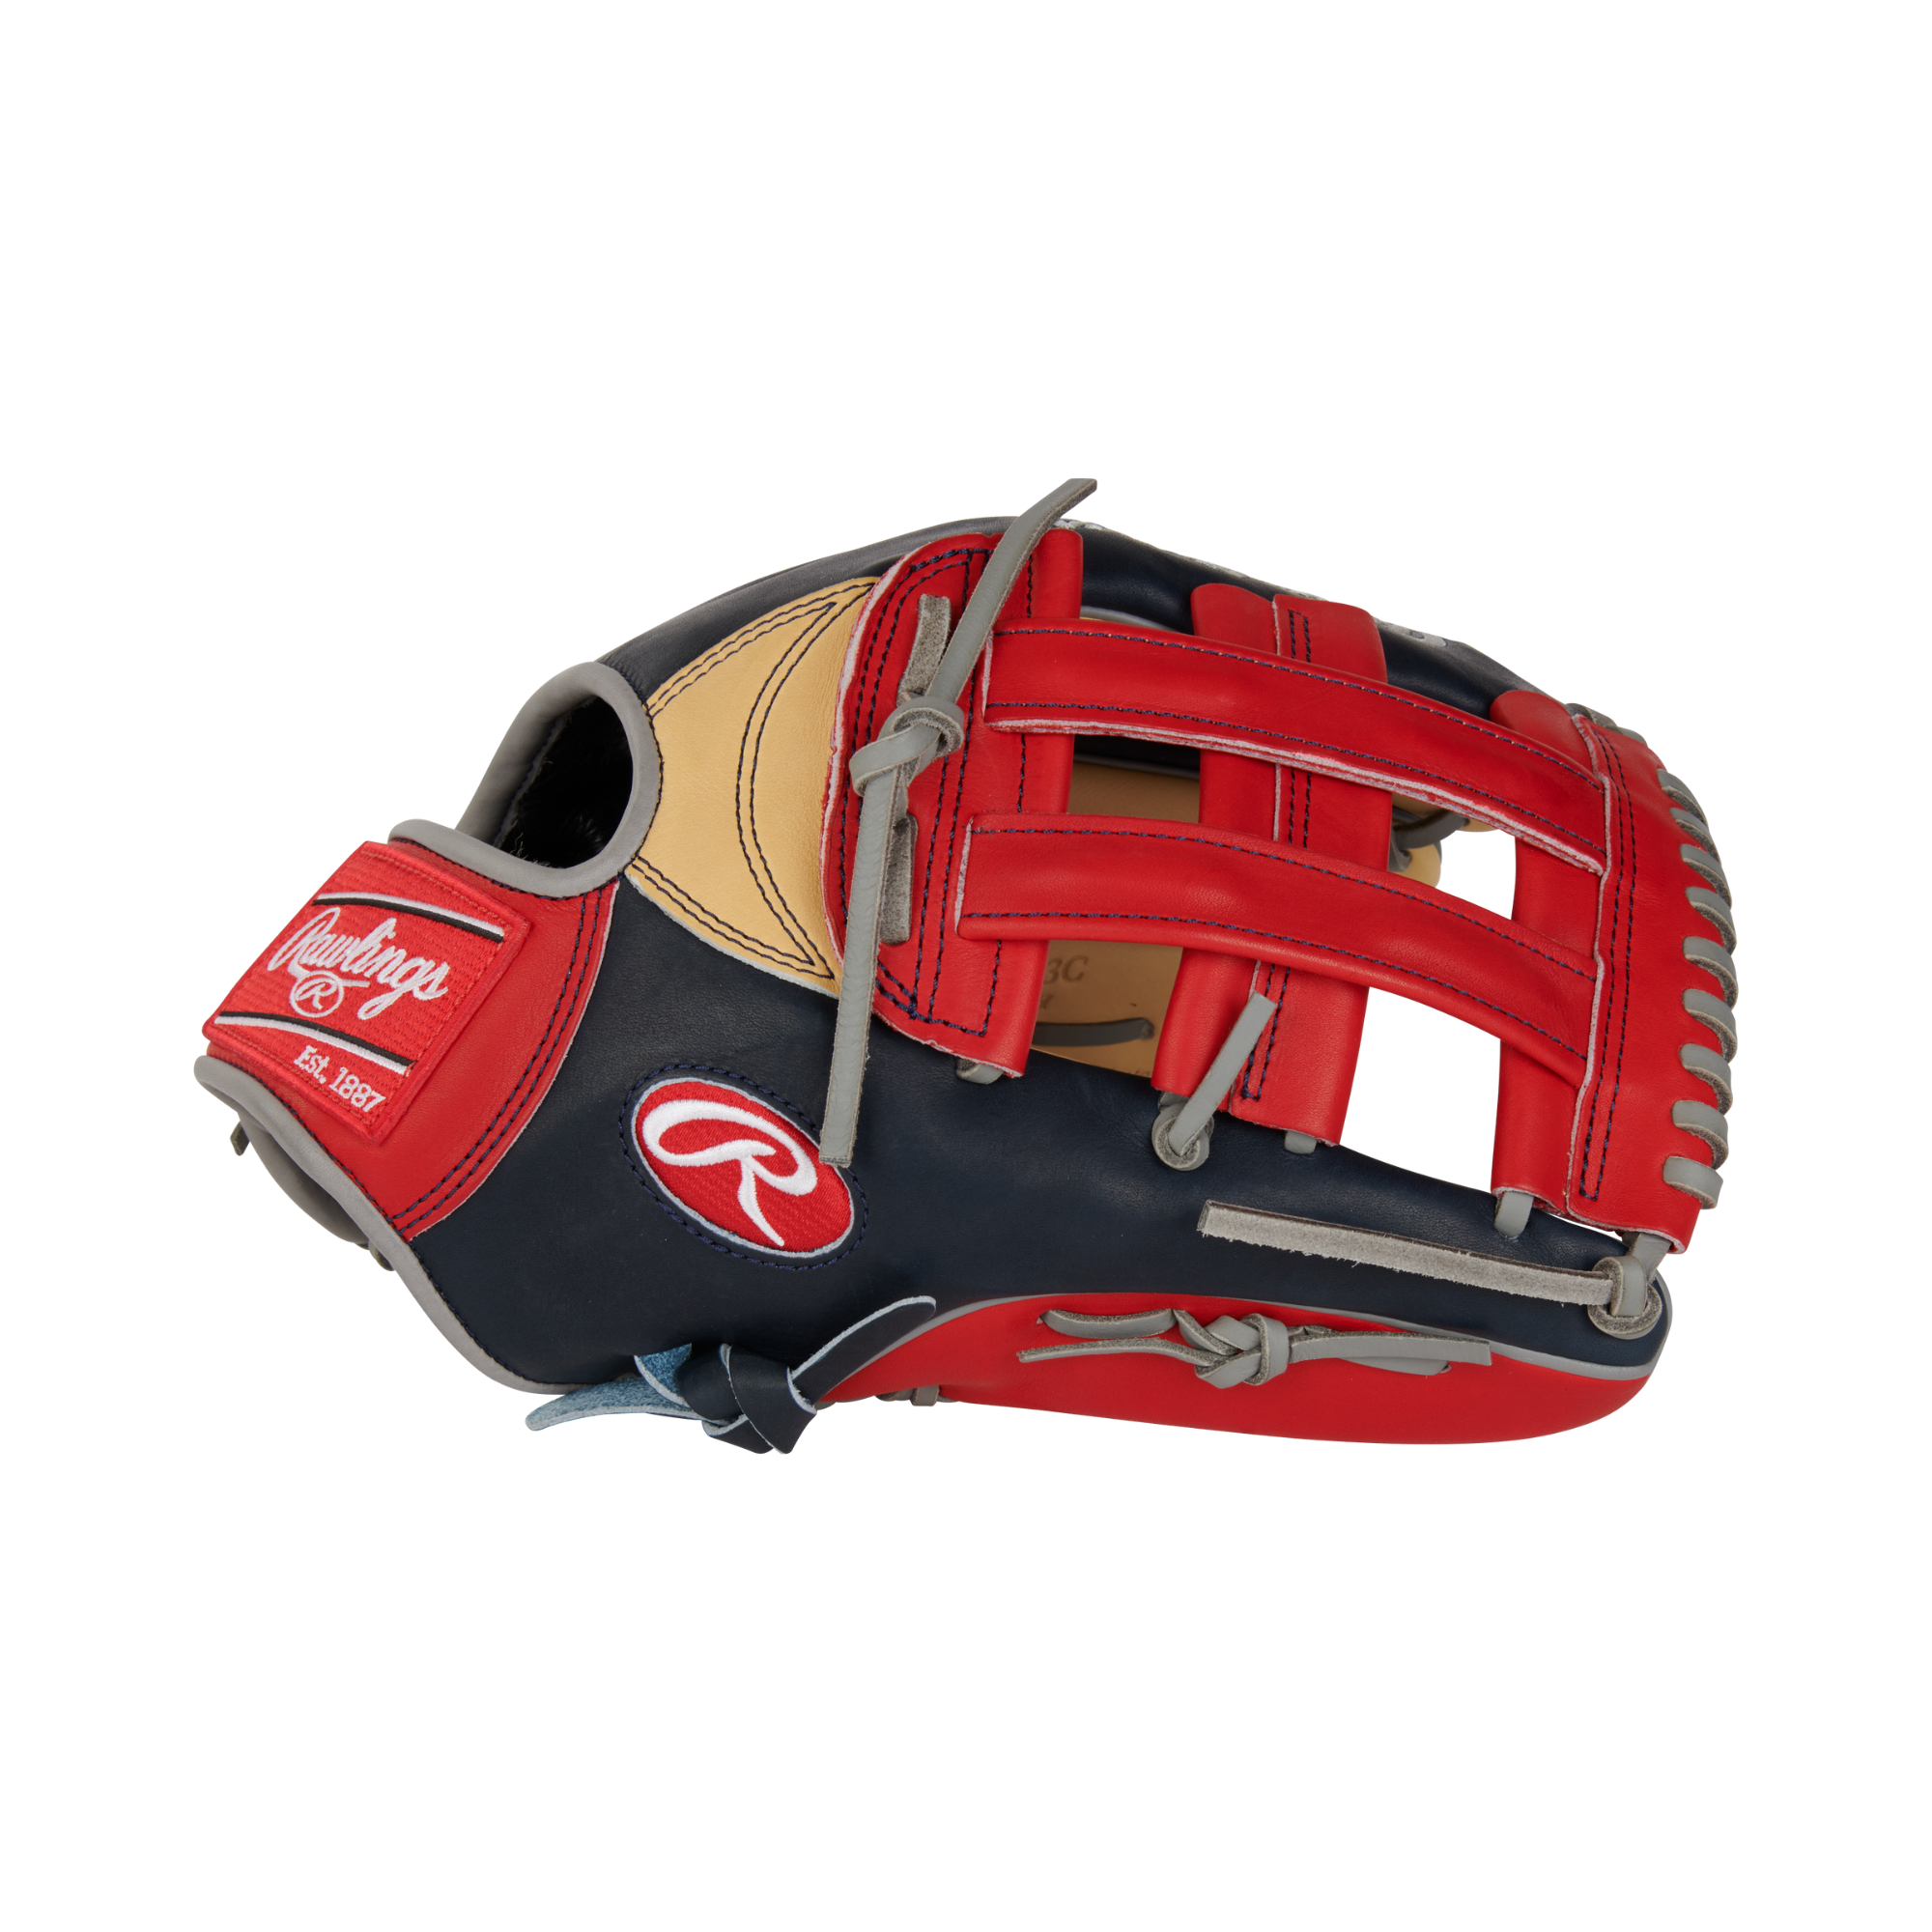 Rawlings Pro Preferred Series Baseball Glove R. Acuna Gameday Pattern 12.75" LHT